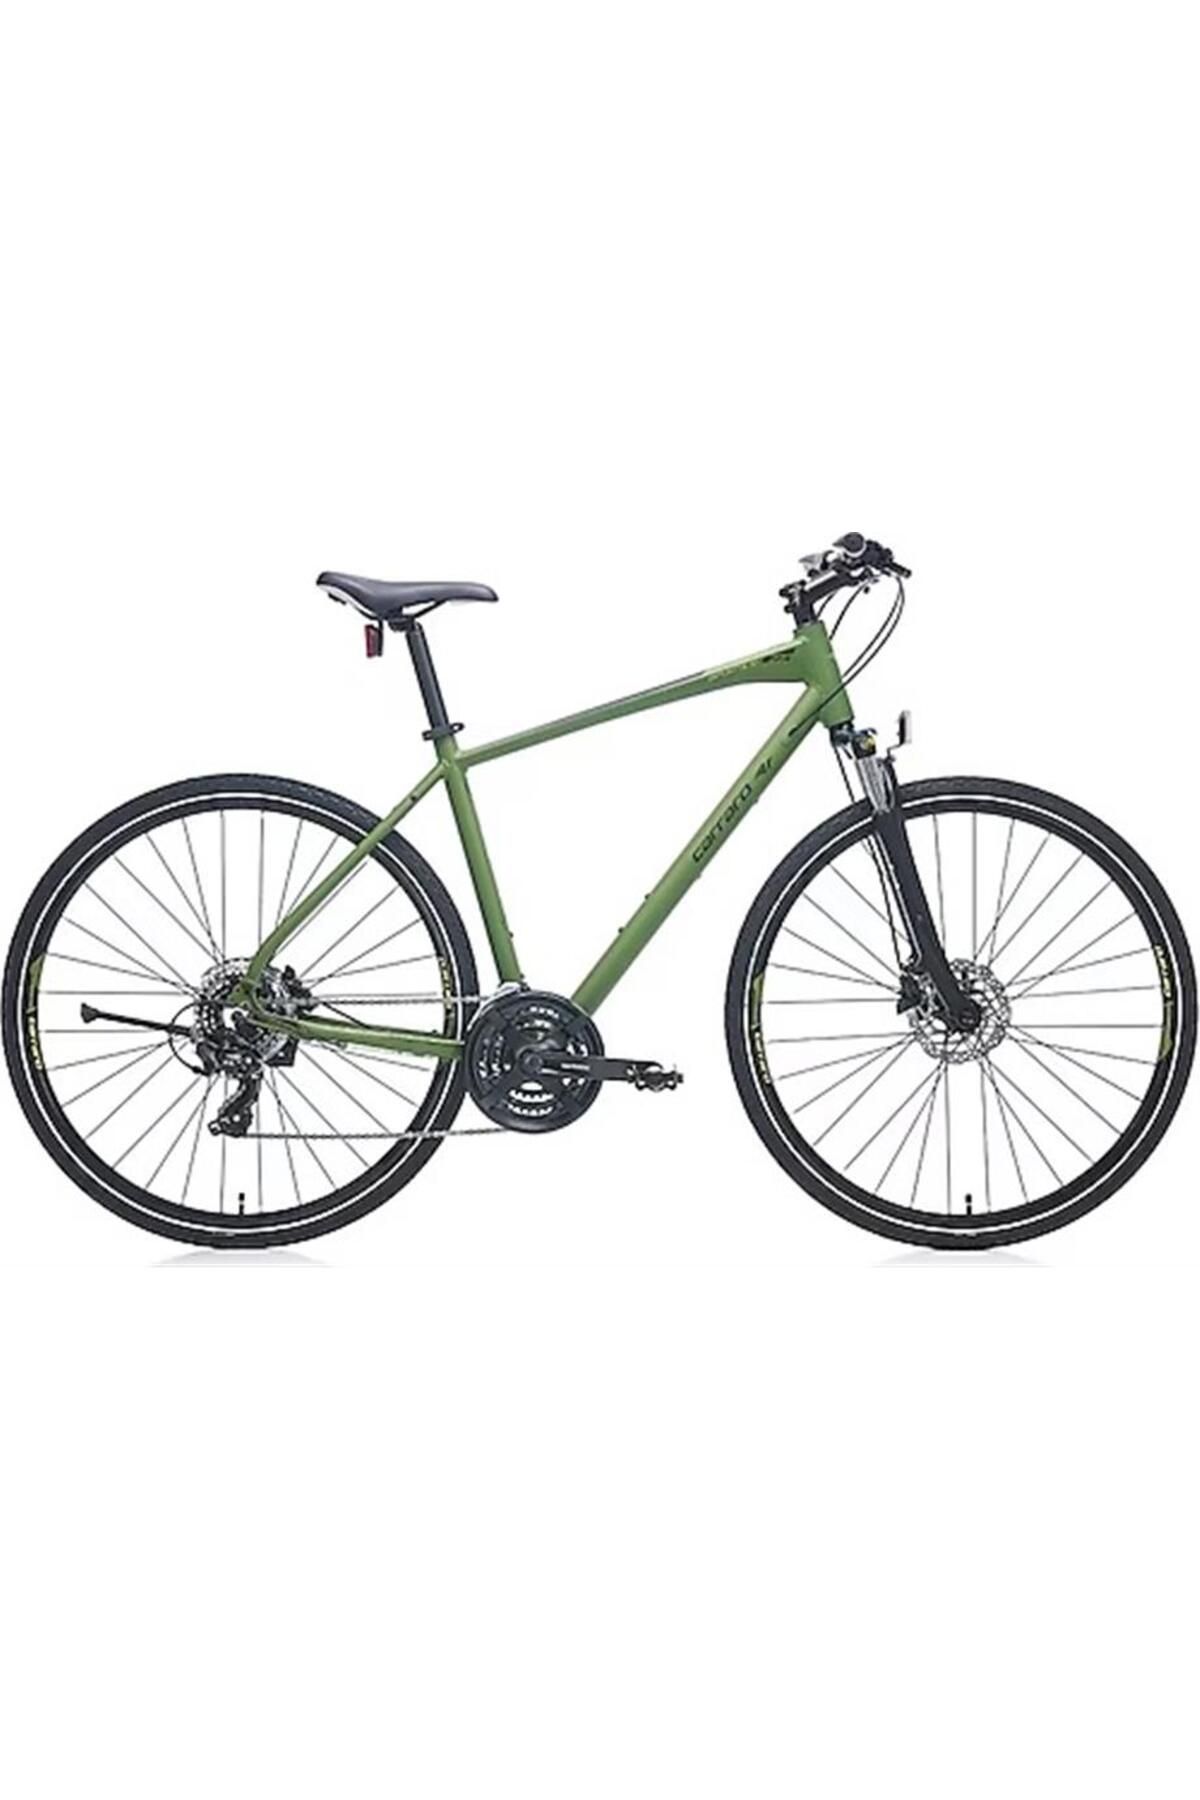 Carraro Sportıve 225 Erkek Şehir Bisikleti 457h Hd 28 Jant 24 Vites Mat Haki Yeşil Siyah Yeşil